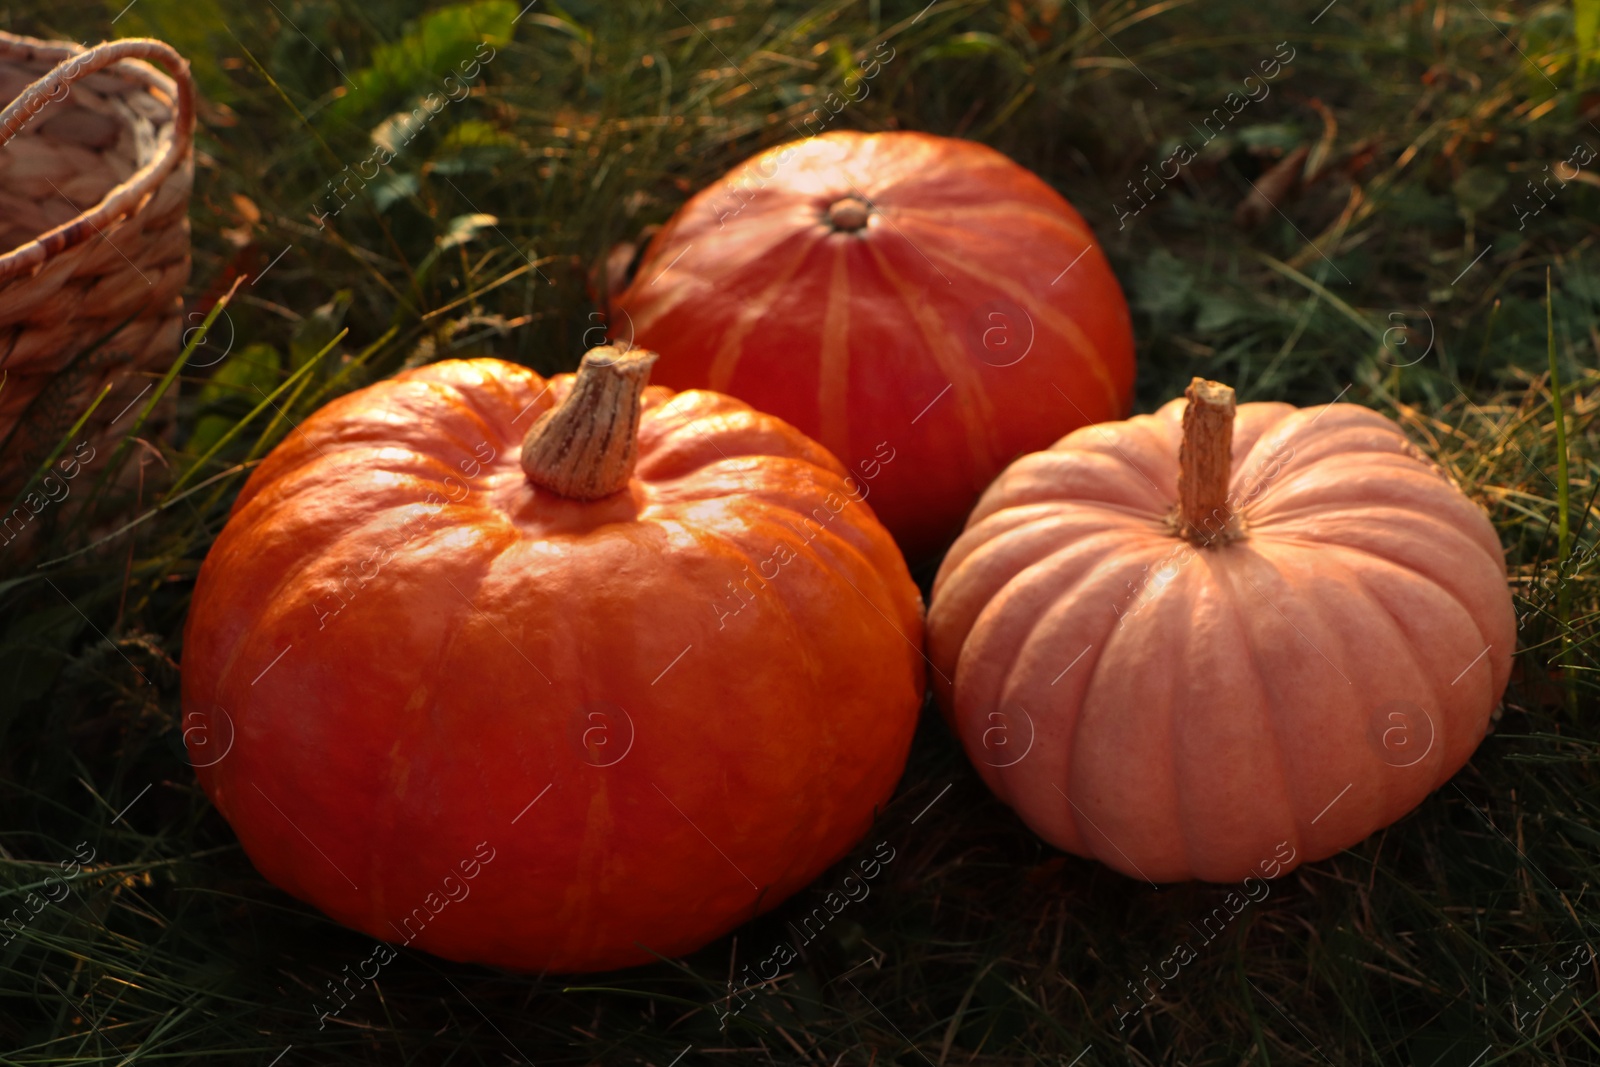 Photo of Whole ripe pumpkins among green grass outdoors